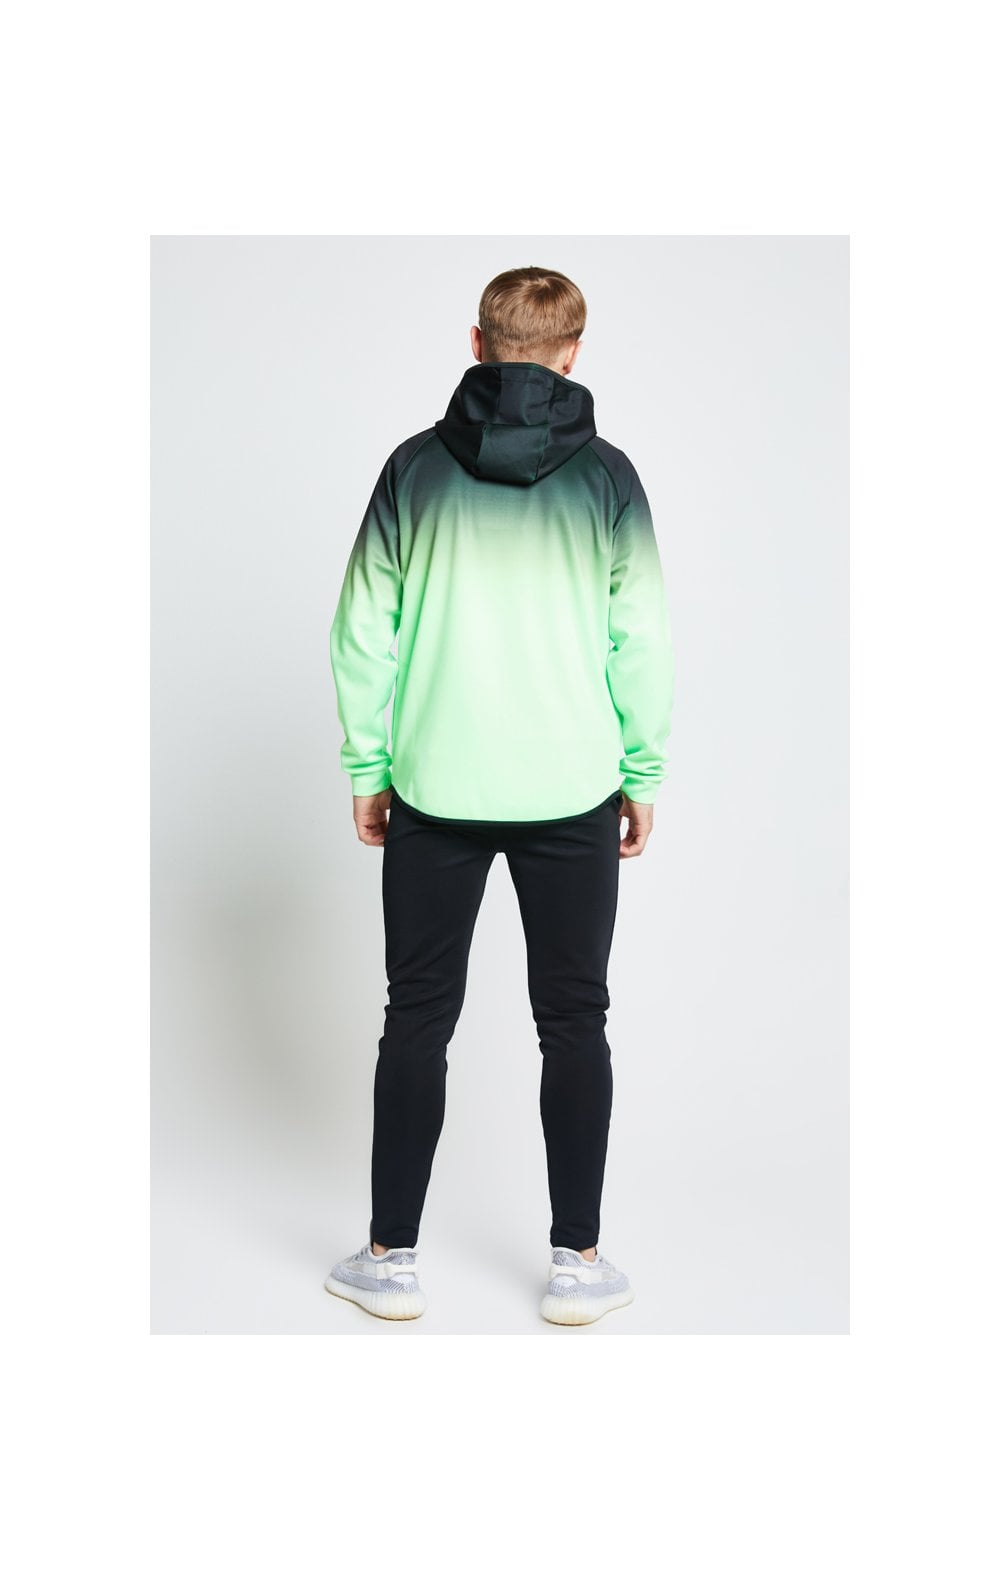 Illusive London Athlete Zip Through Hoodie - Black & Neon Green (4)